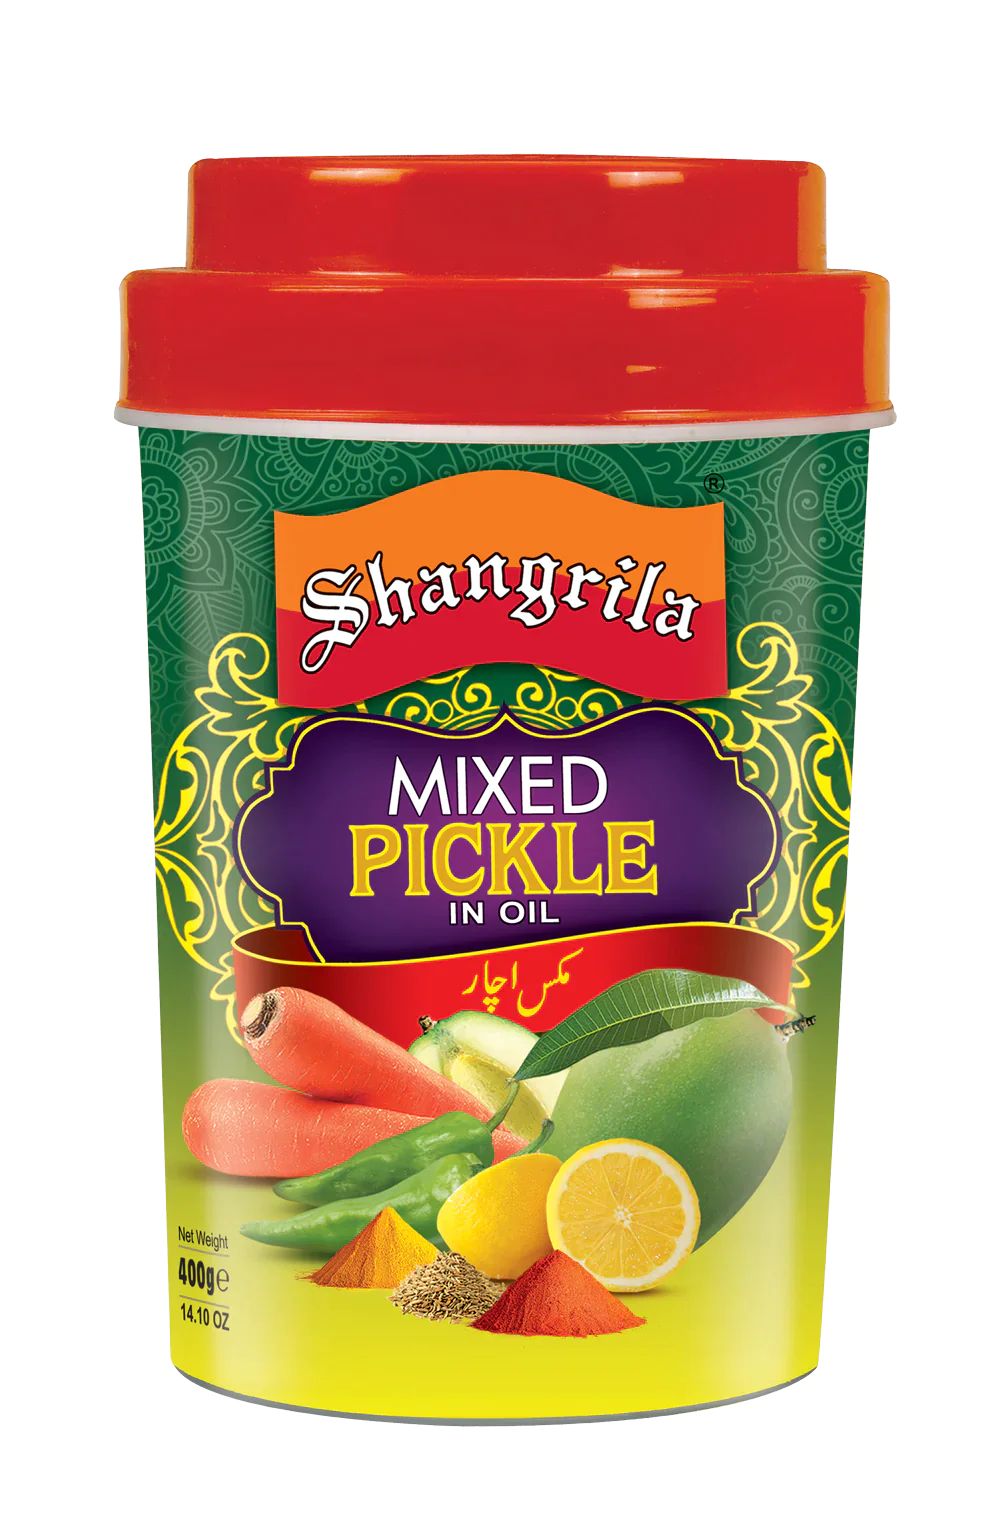 Shangrila Pickle 400g